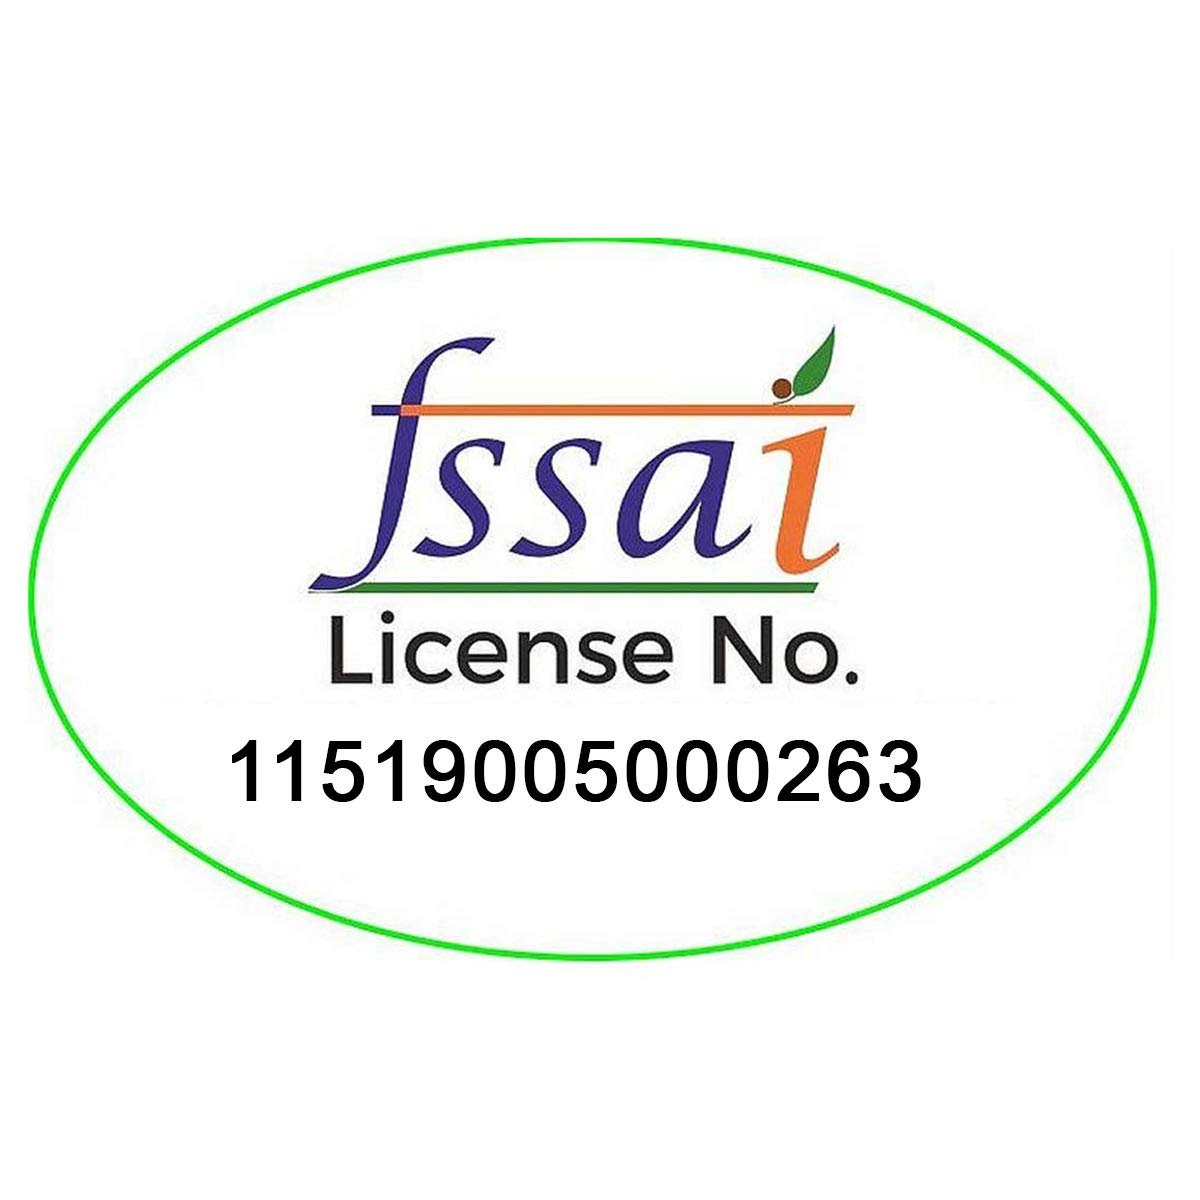 Food License Online Process - Fssai License